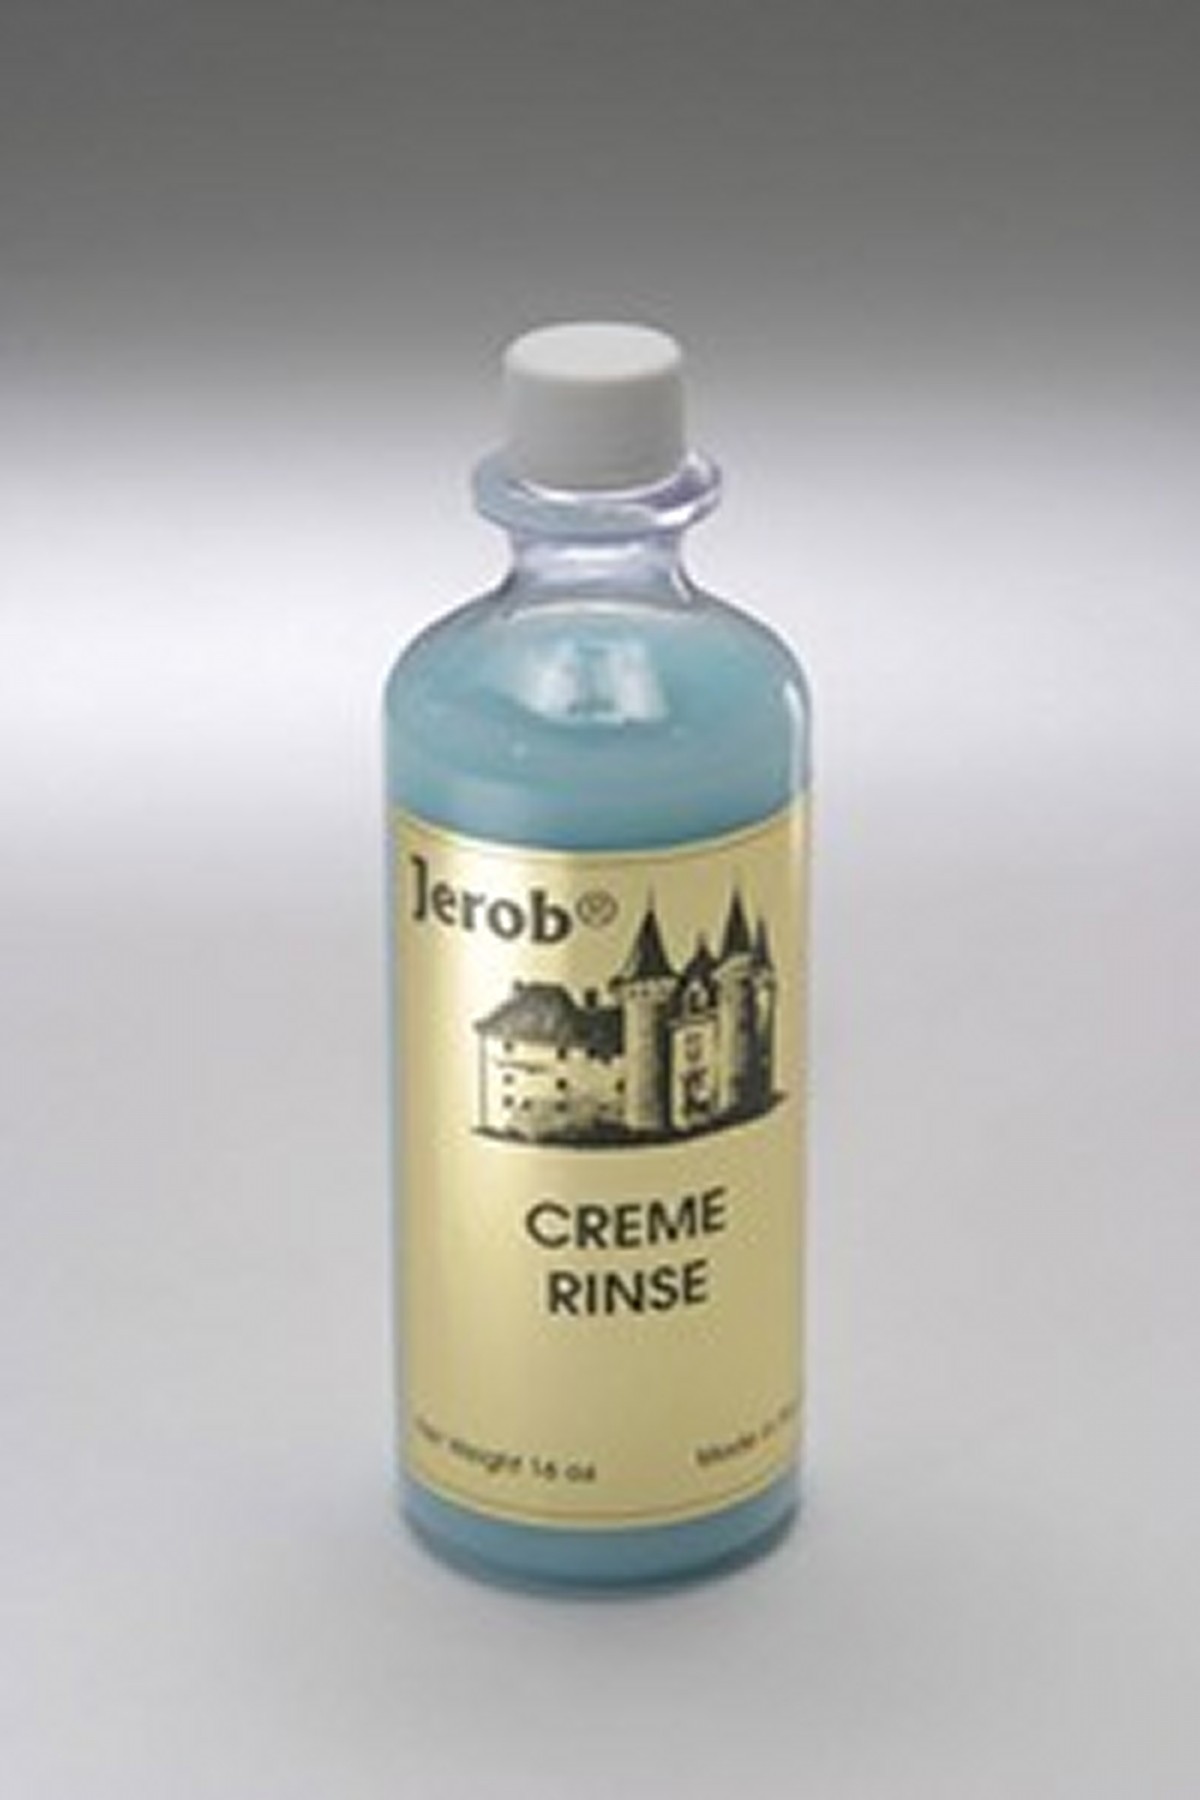 Jerob šampon Creme Rinse 236 ml